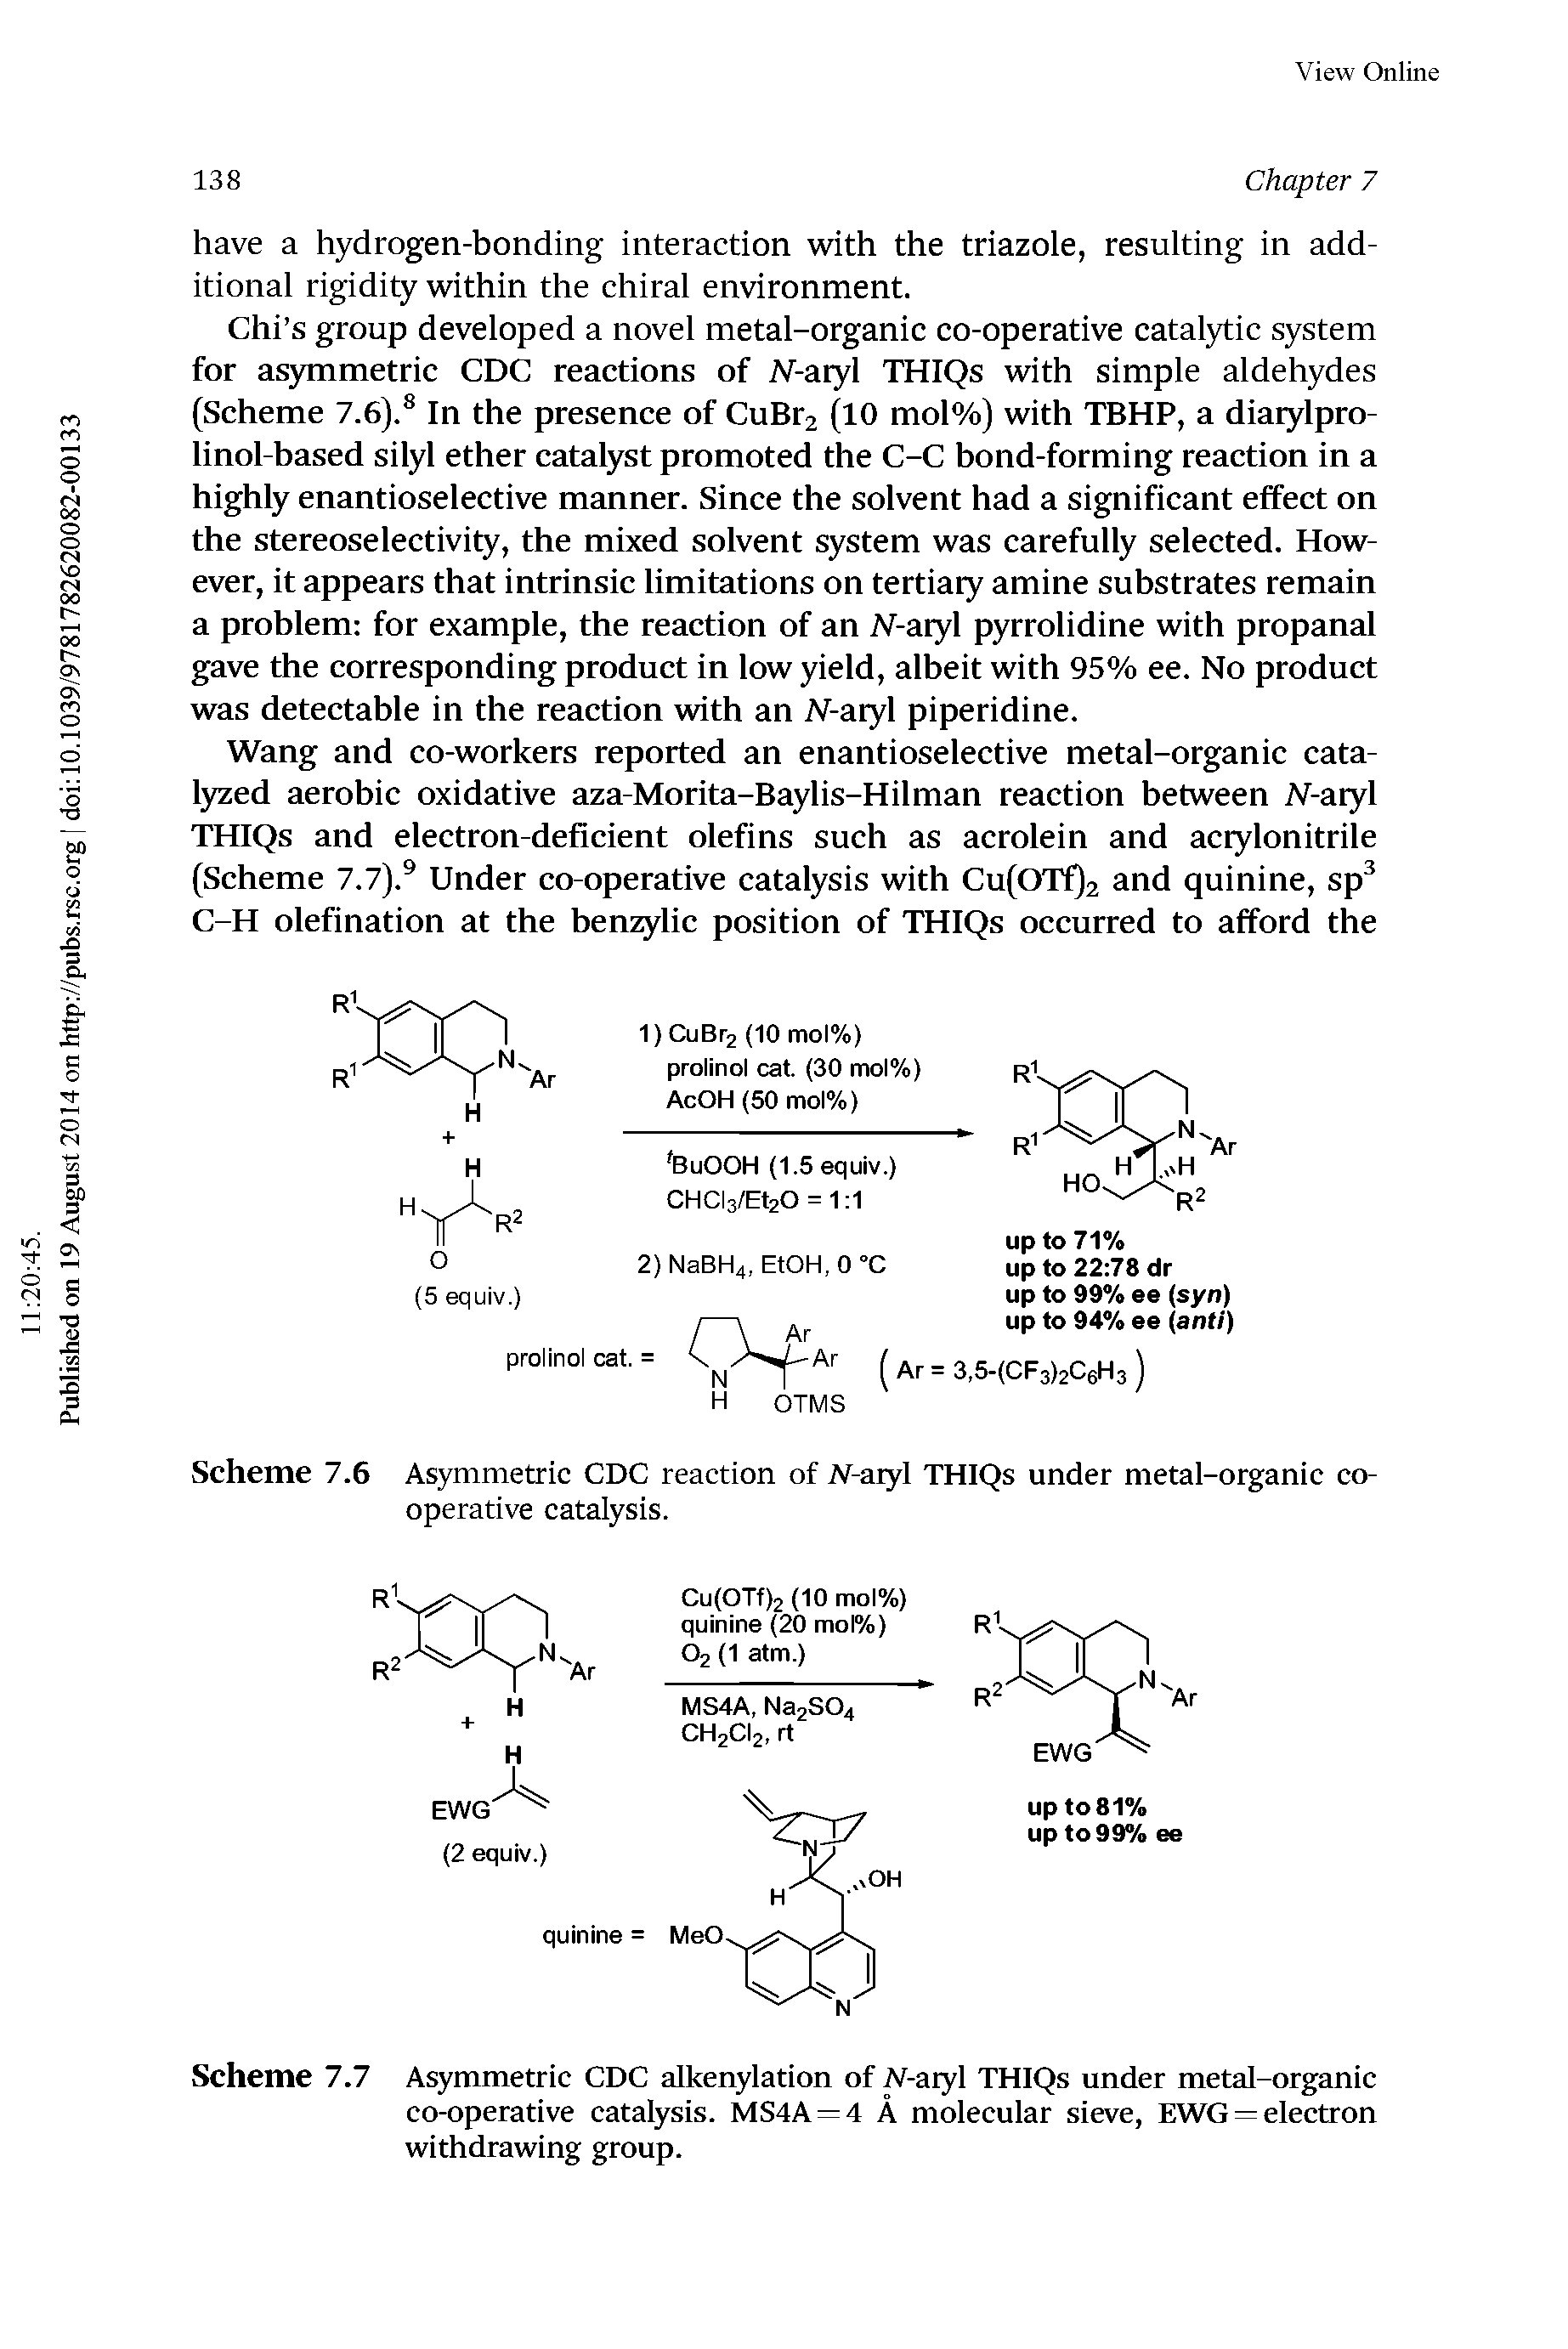 Scheme 7.7 A mmetric CDC alkenylation of Af-aiyl THIQs under metal-organic co-operative catalysis. MS4A = 4 A molecular sieve, EWG eleetron withdrawing group.